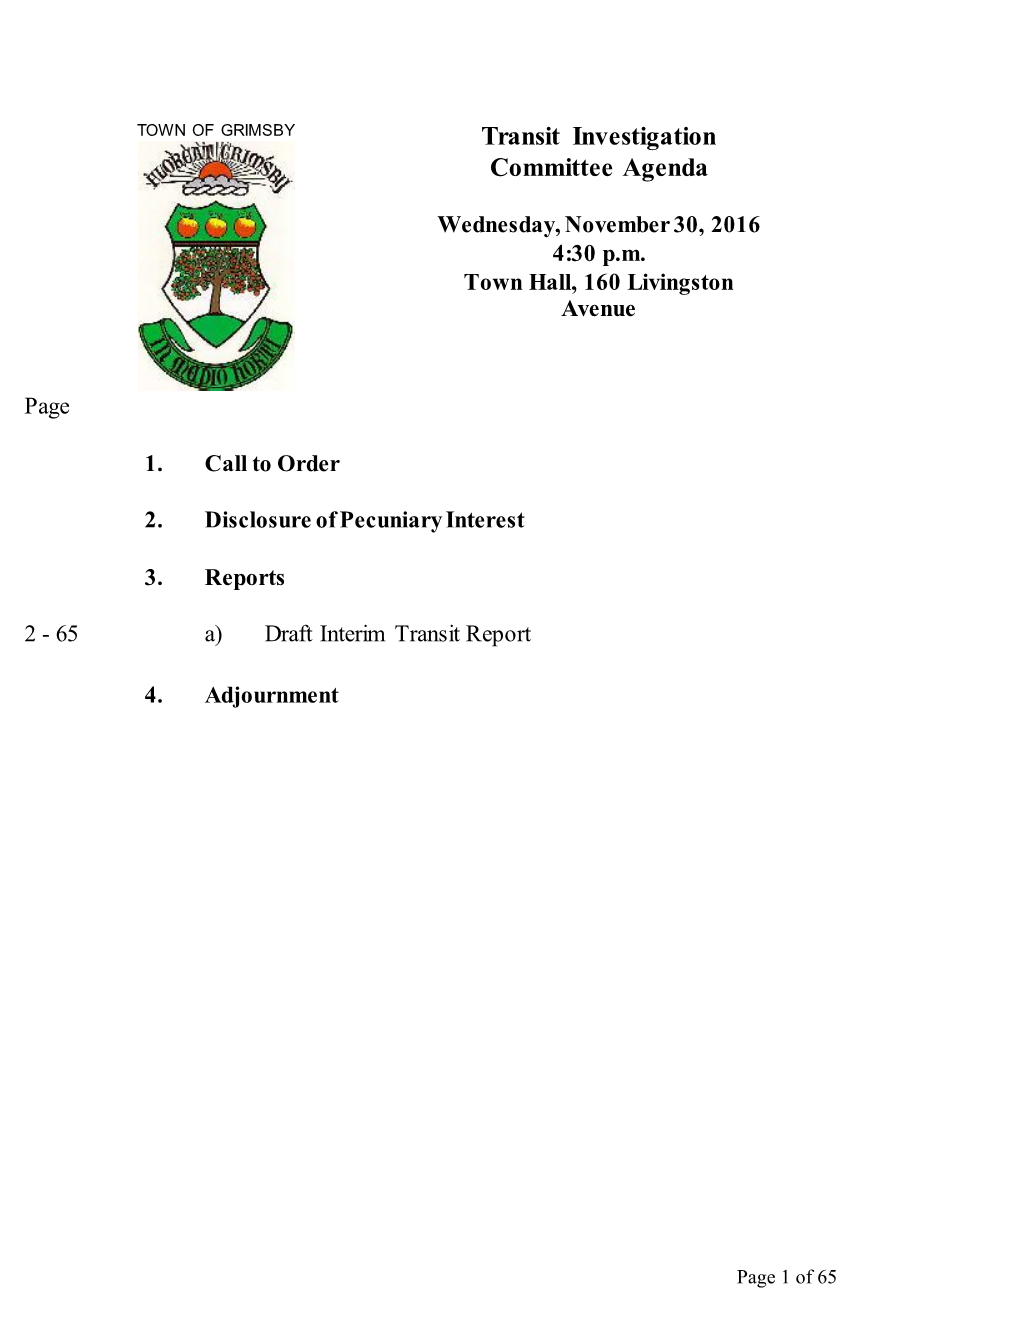 Transit Investigation Committee Agenda